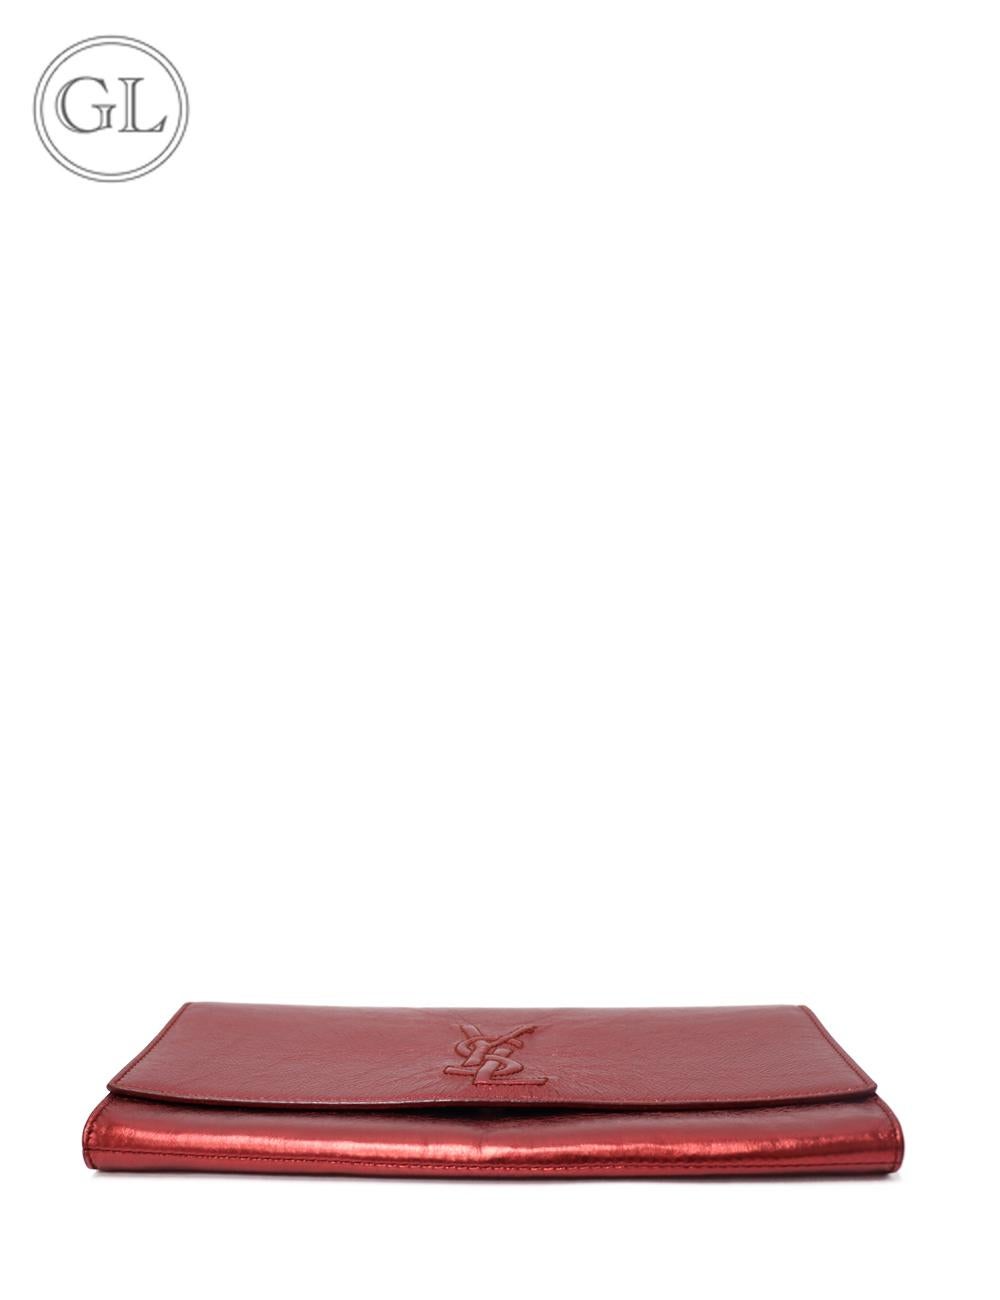 Women's or Men's Yves Saint Laurent Metallic Red Leather Belle De Jour Flap Clutch